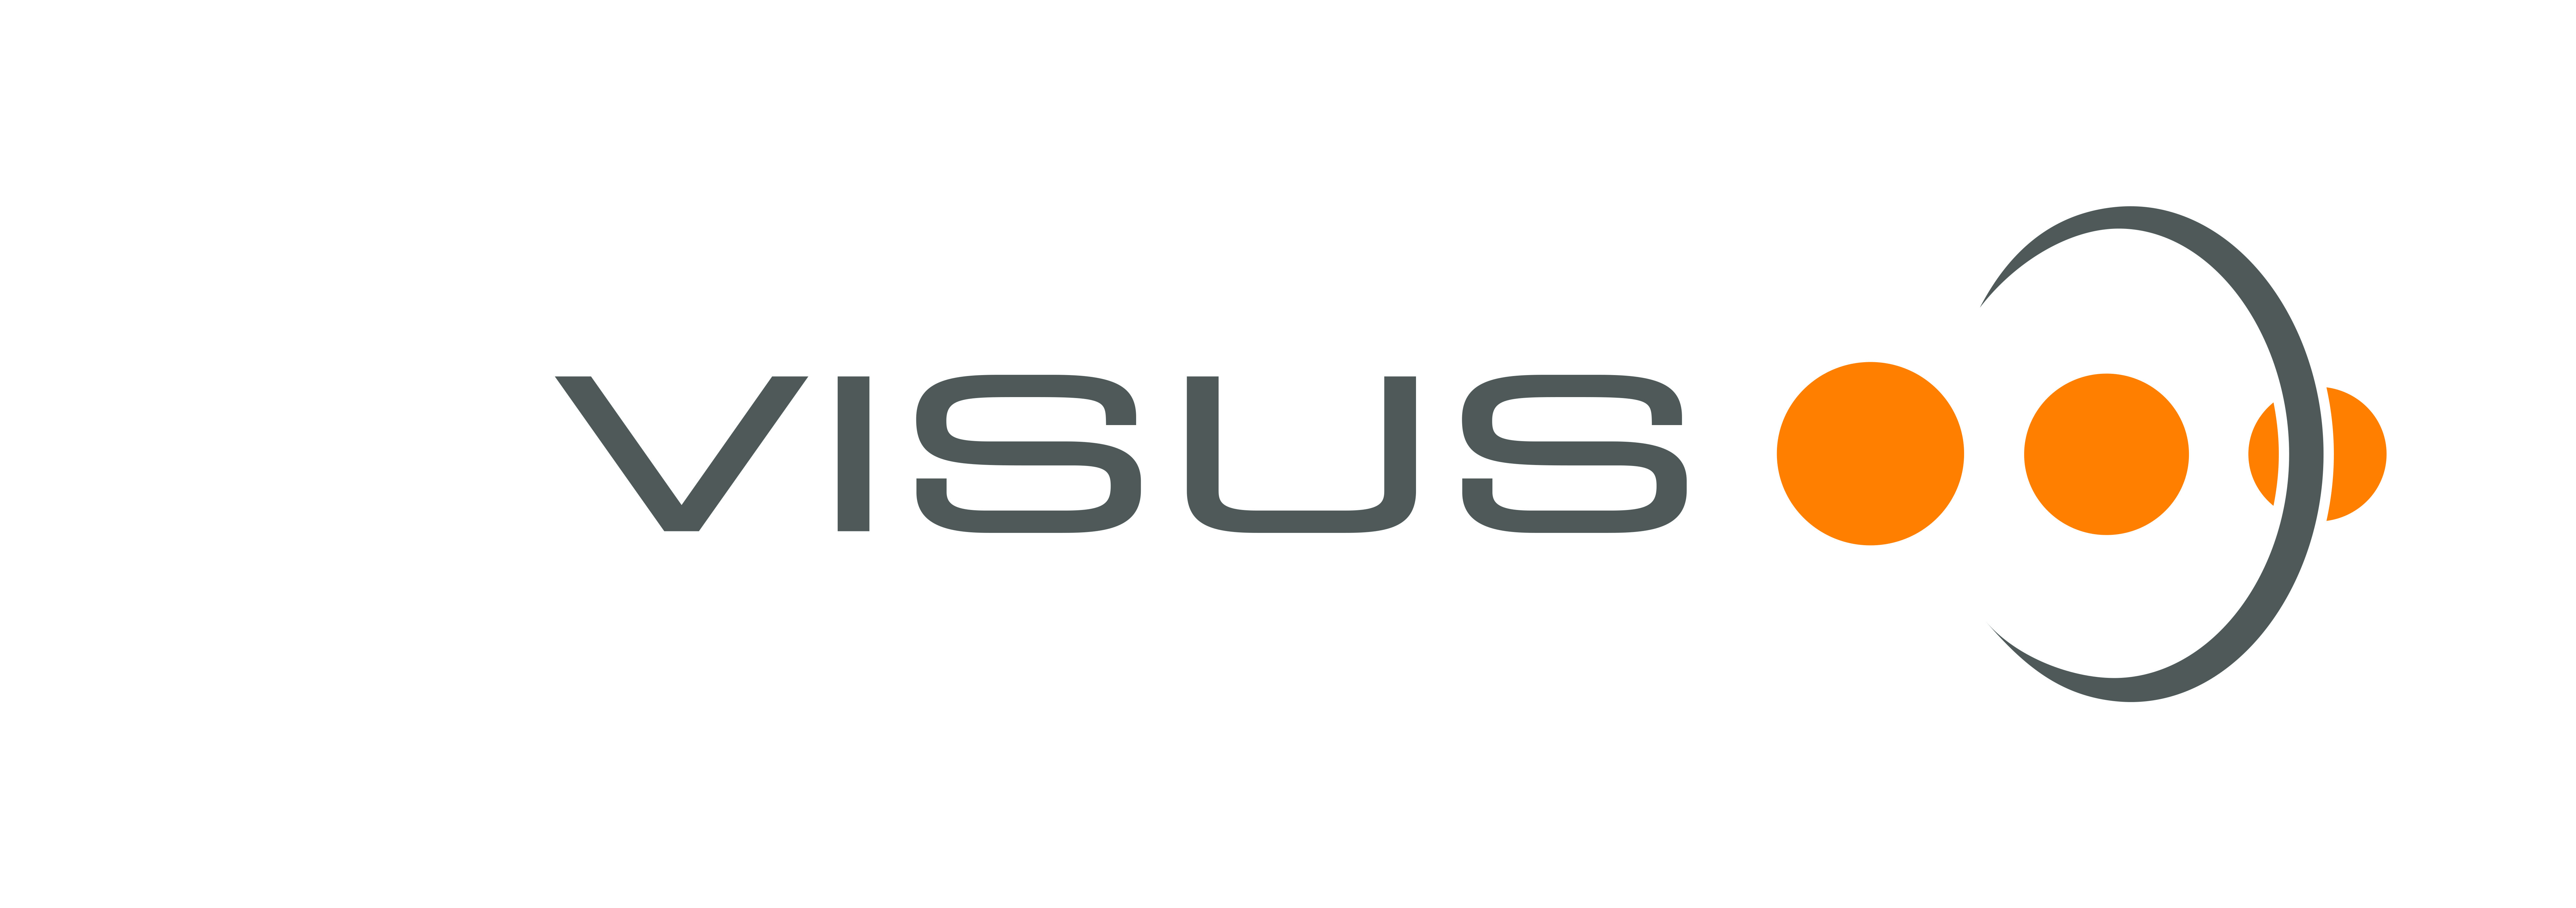 VISUS Health IT GmbH logo